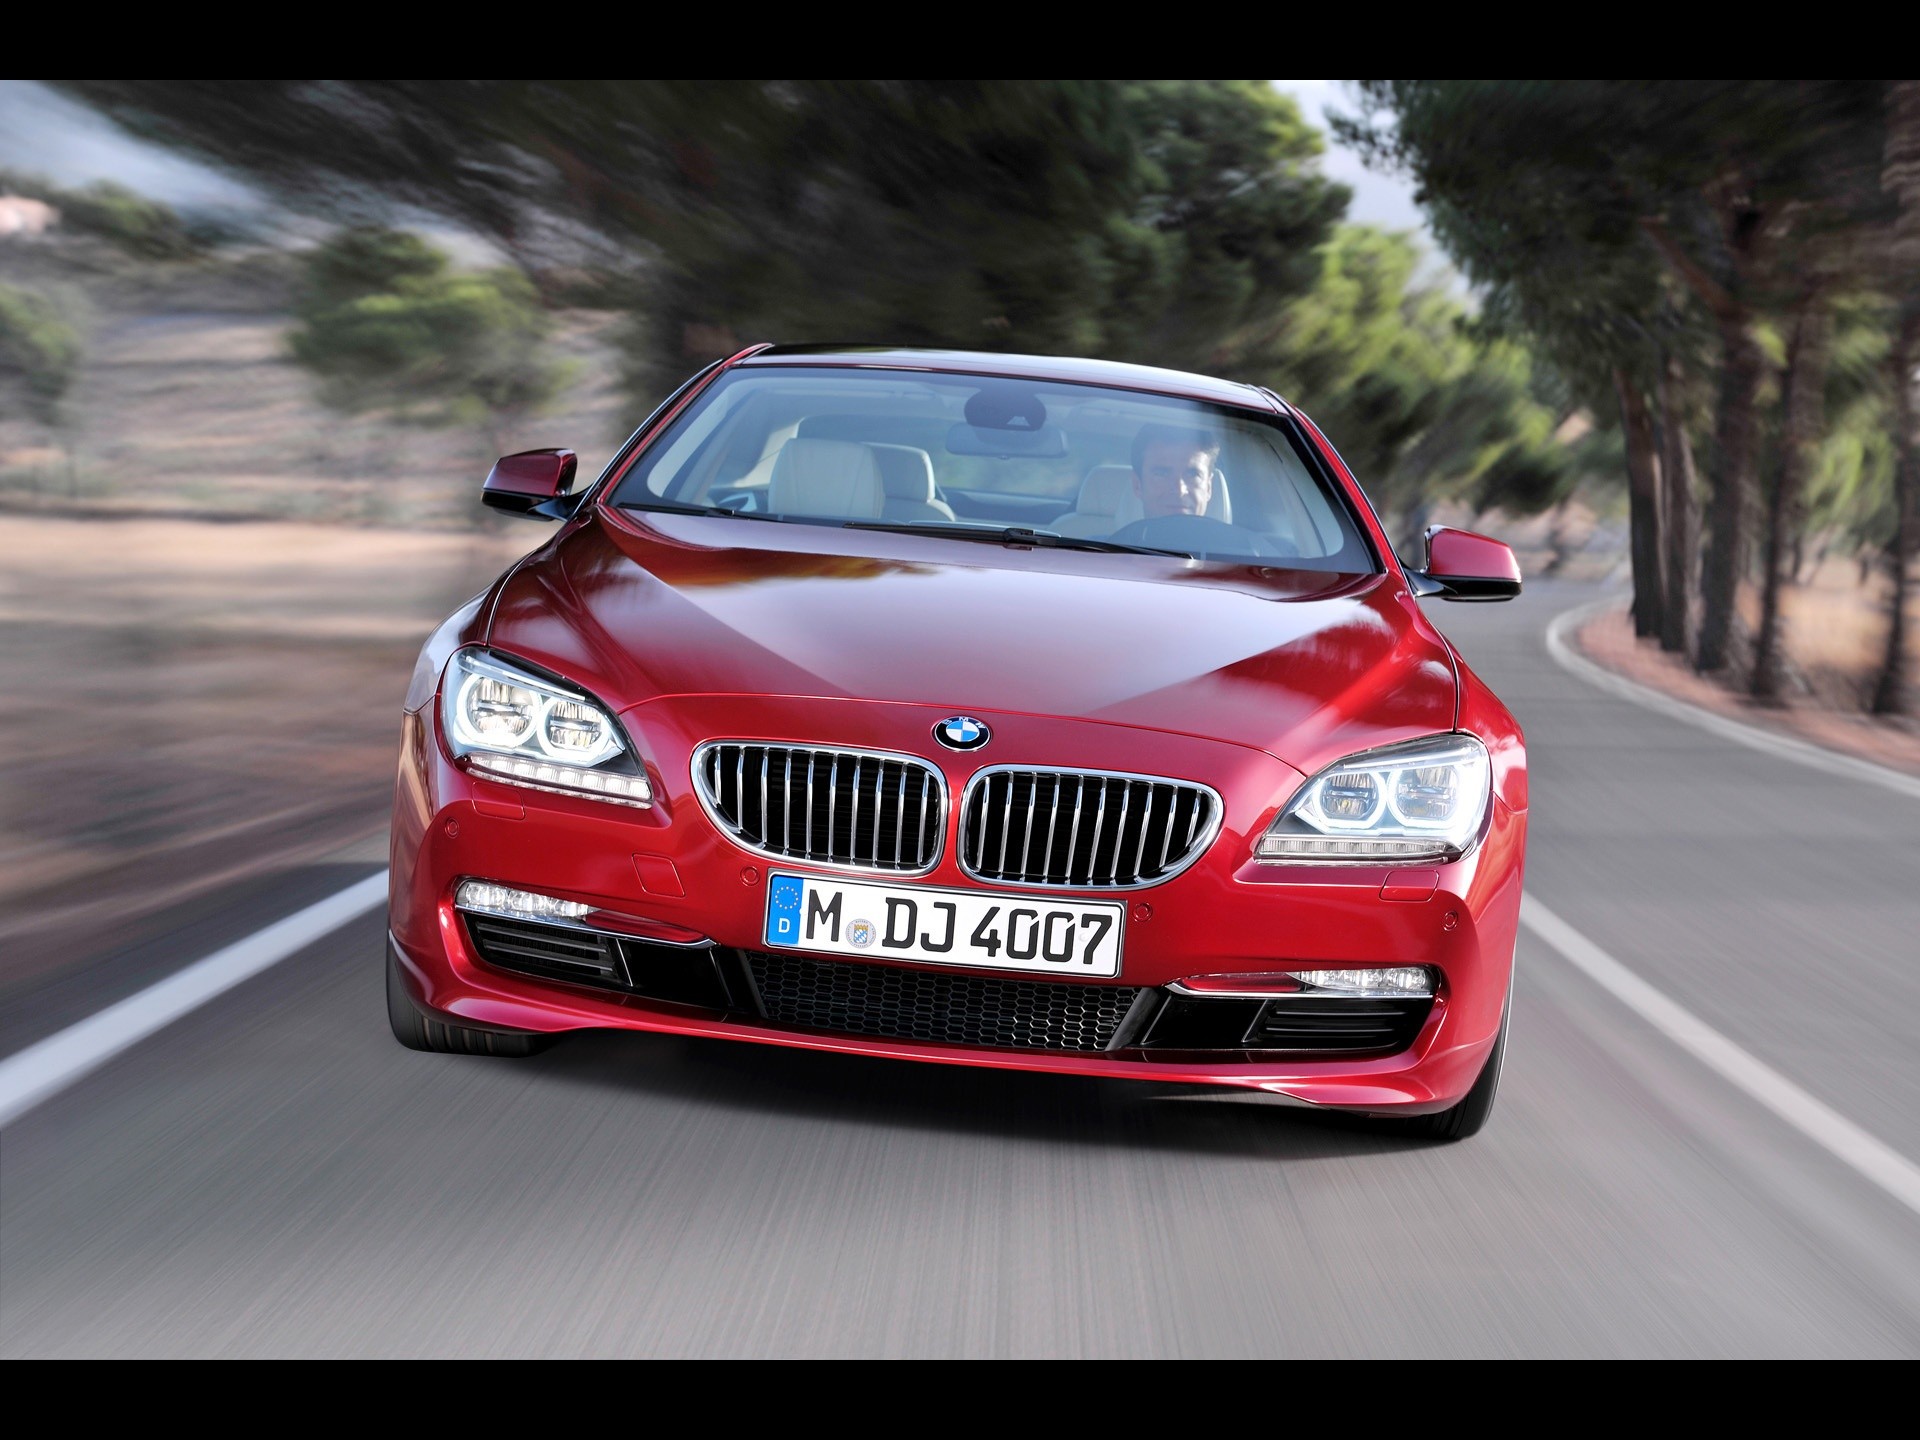 BMW, cars - desktop wallpaper